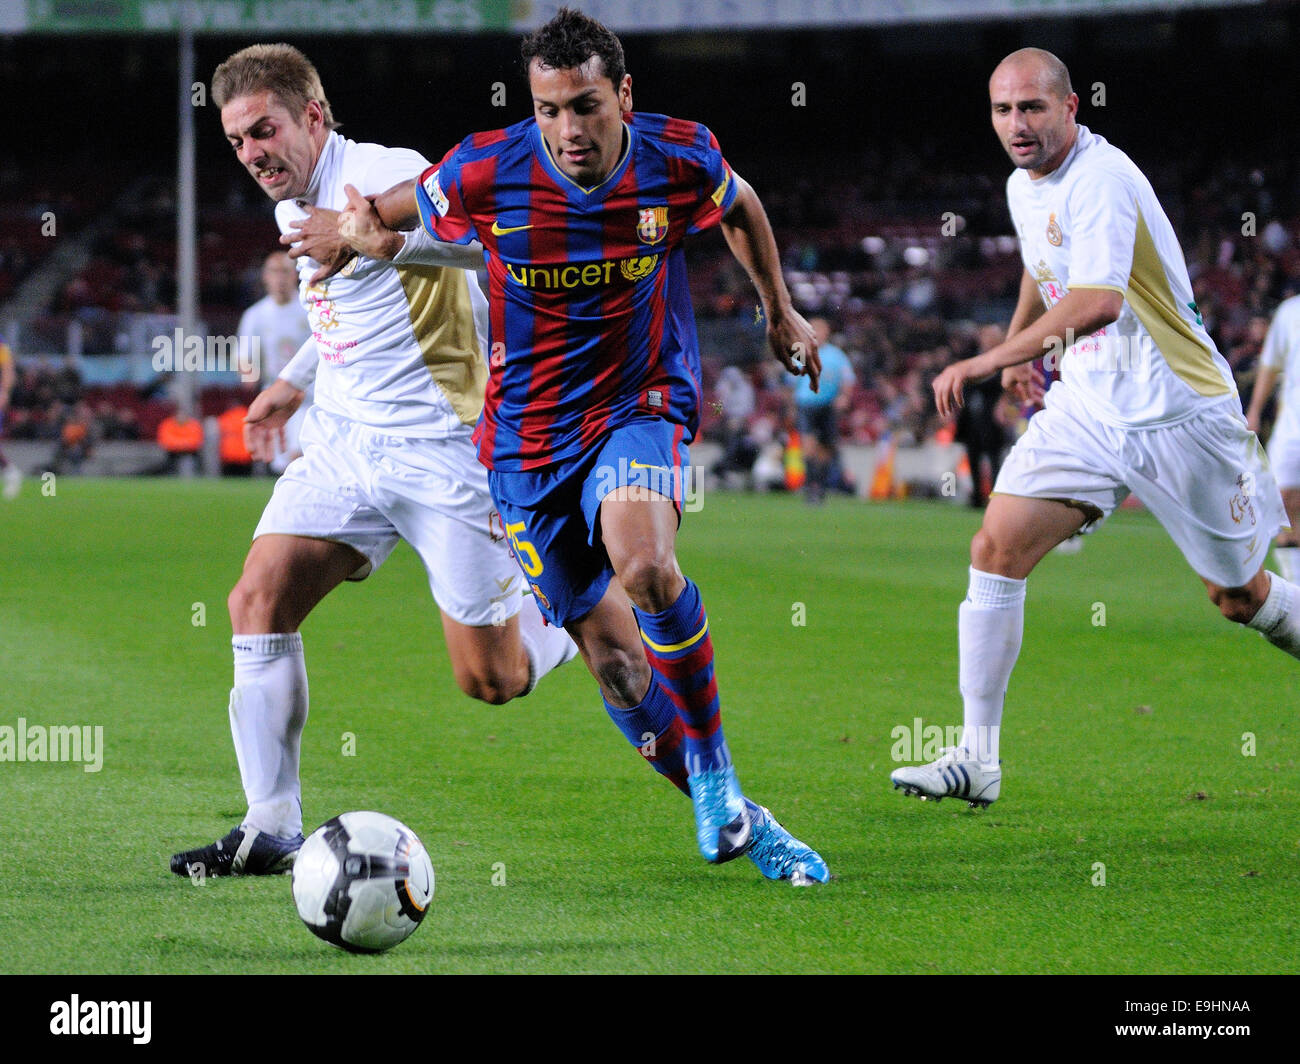 BARCELONA - NOV 10: Jeffren Suarez, F.C Barcelona player, plays against Cultural Leonesa at the Camp Nou Stadium. Stock Photo